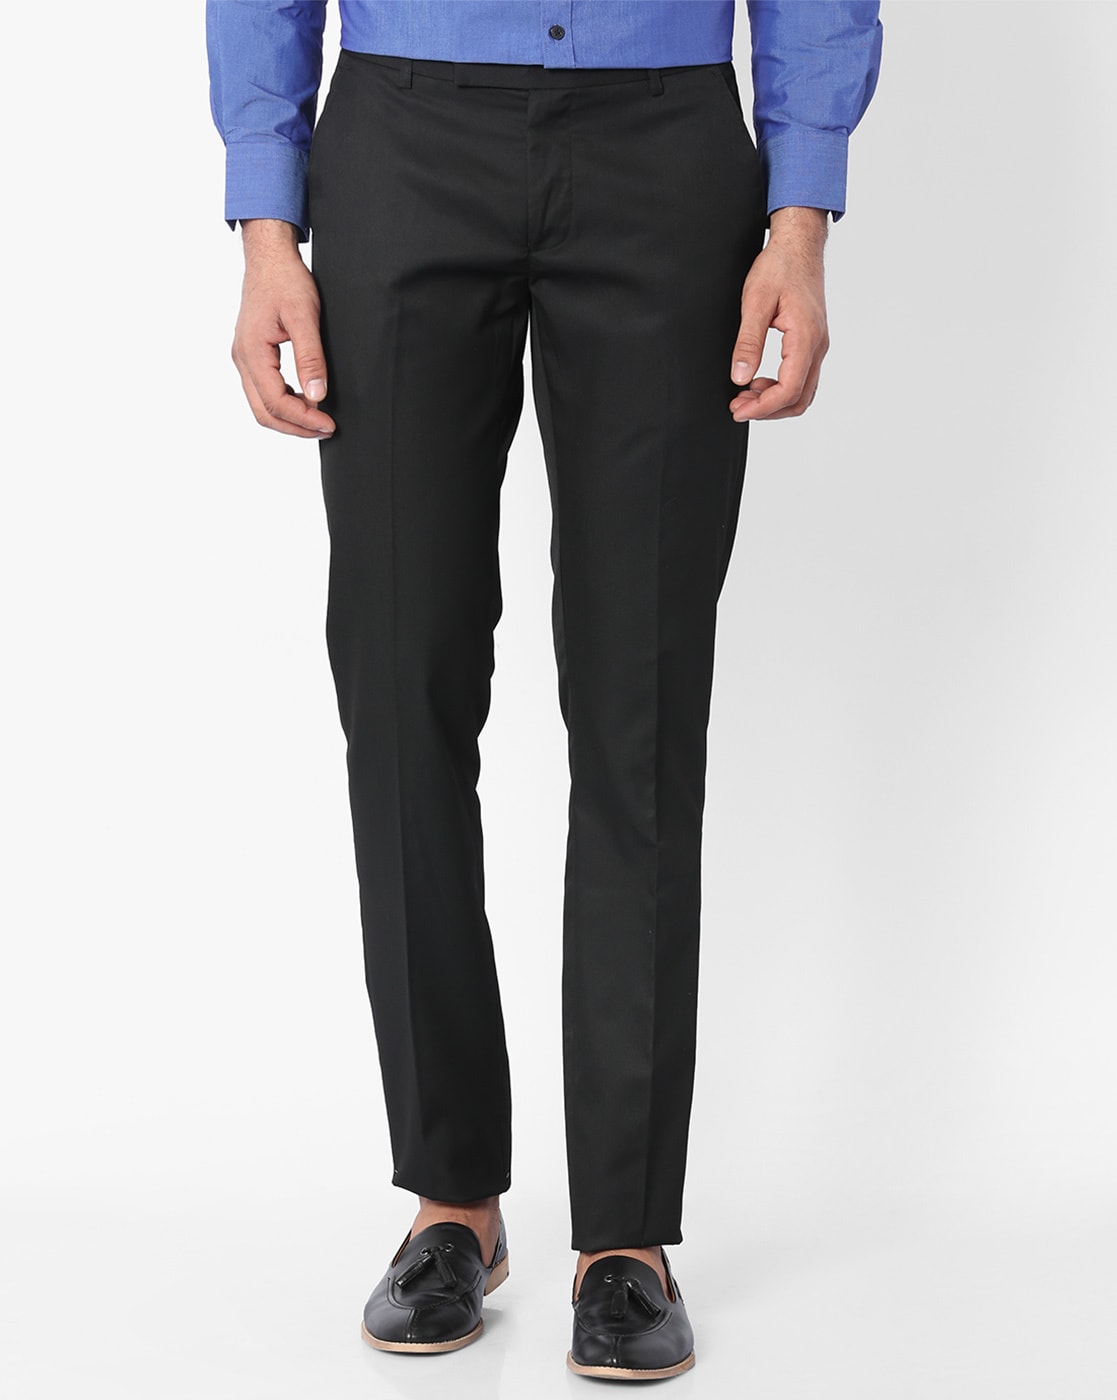 Buy VETEMENTS men black sweatpants with logo for $750 online on SV77,  UE63SP115B/1302